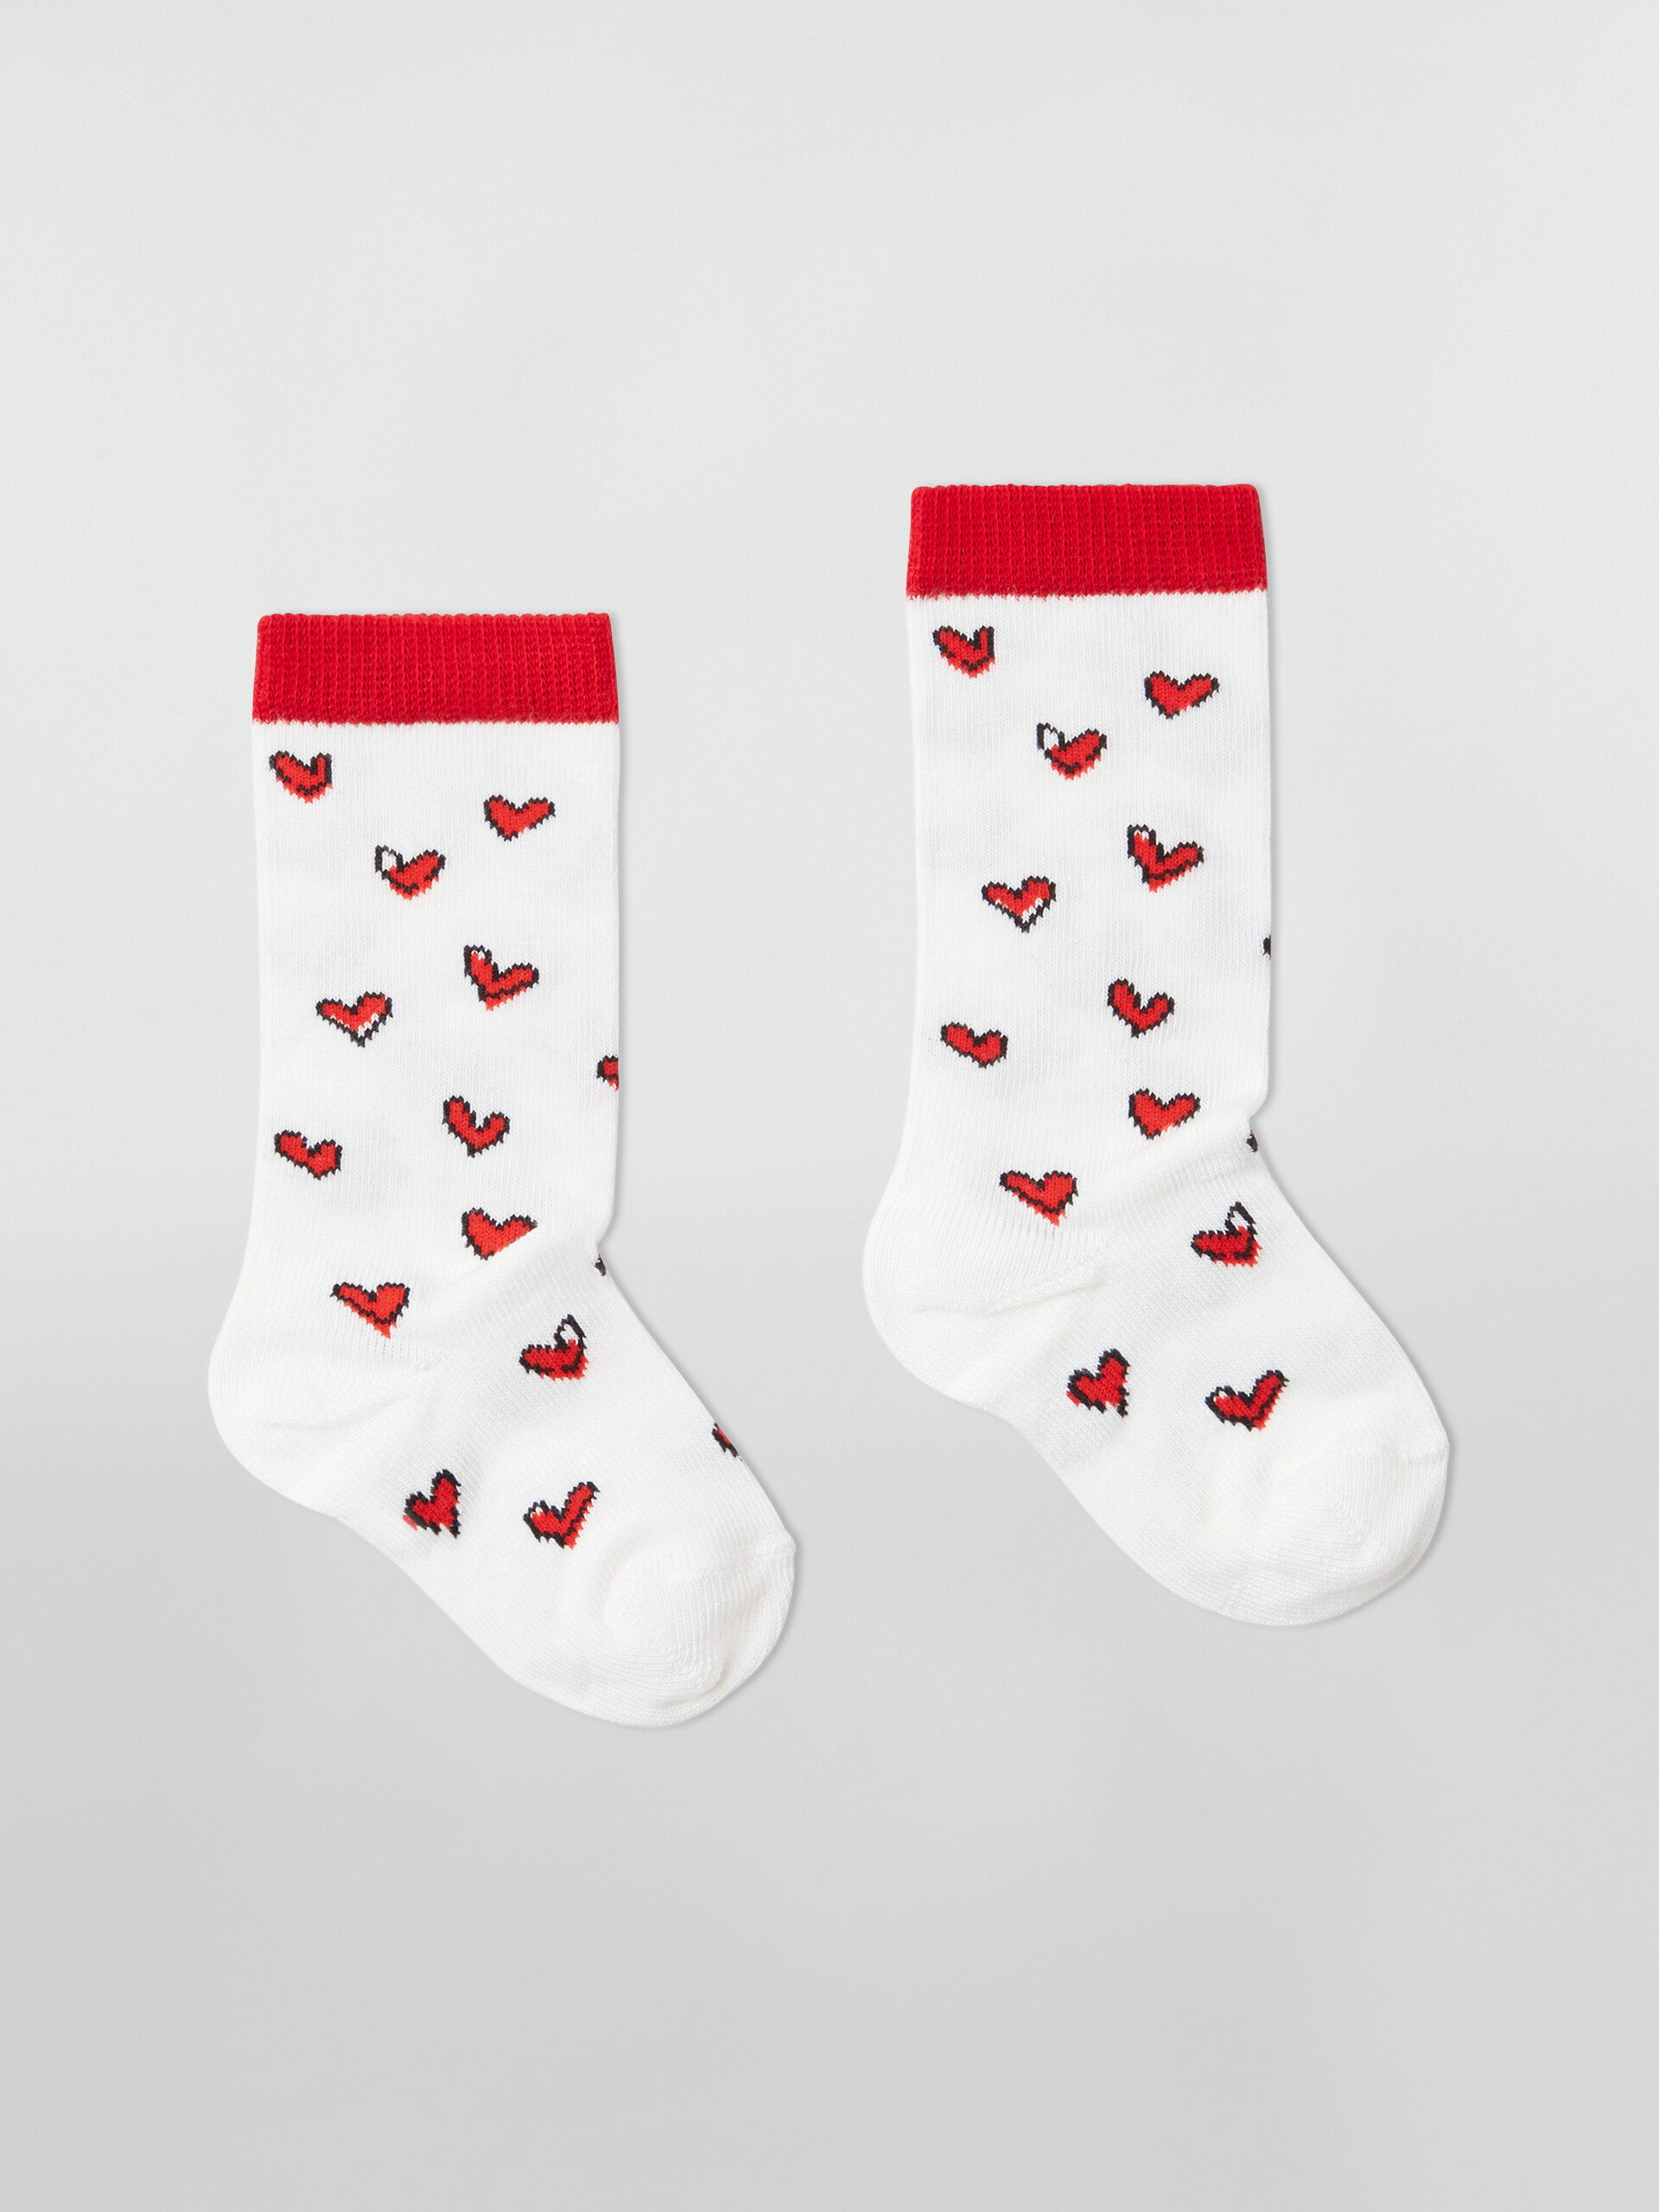 SOCKS WITH HEARTS - Socks - Image 1